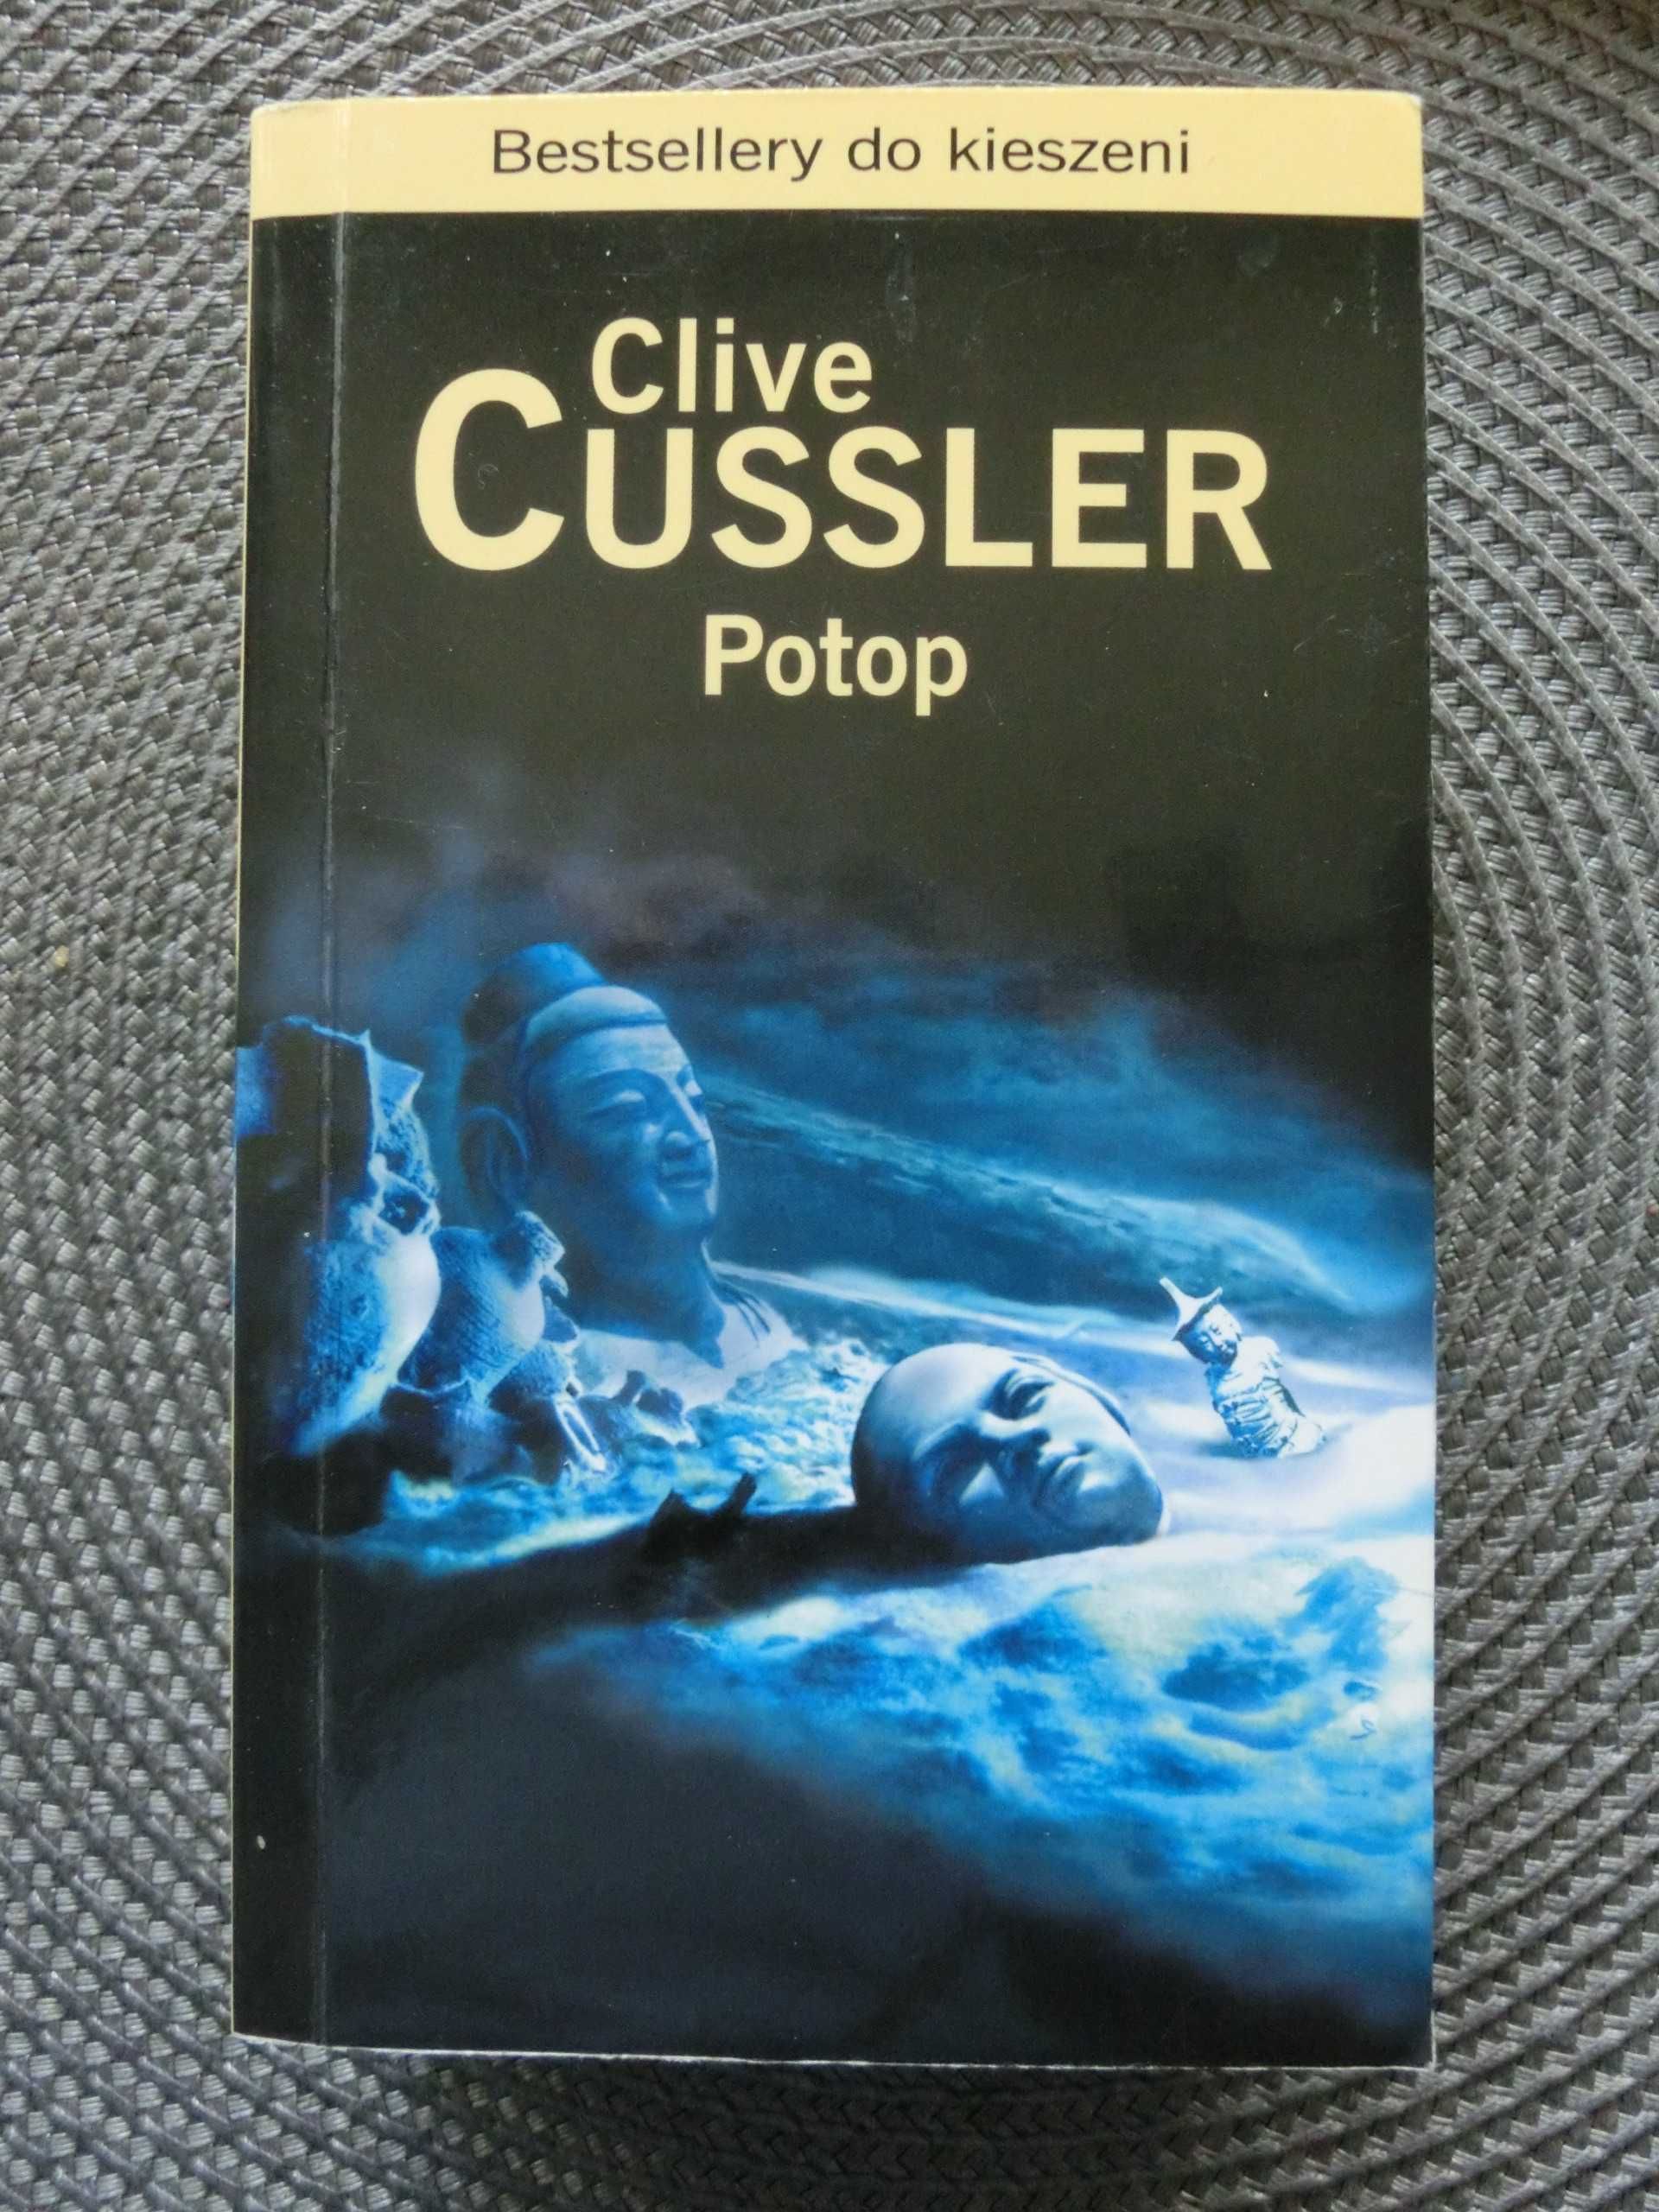 Clive Cussler -Cyklop,Potop Sztorm- zestaw 3 książek.